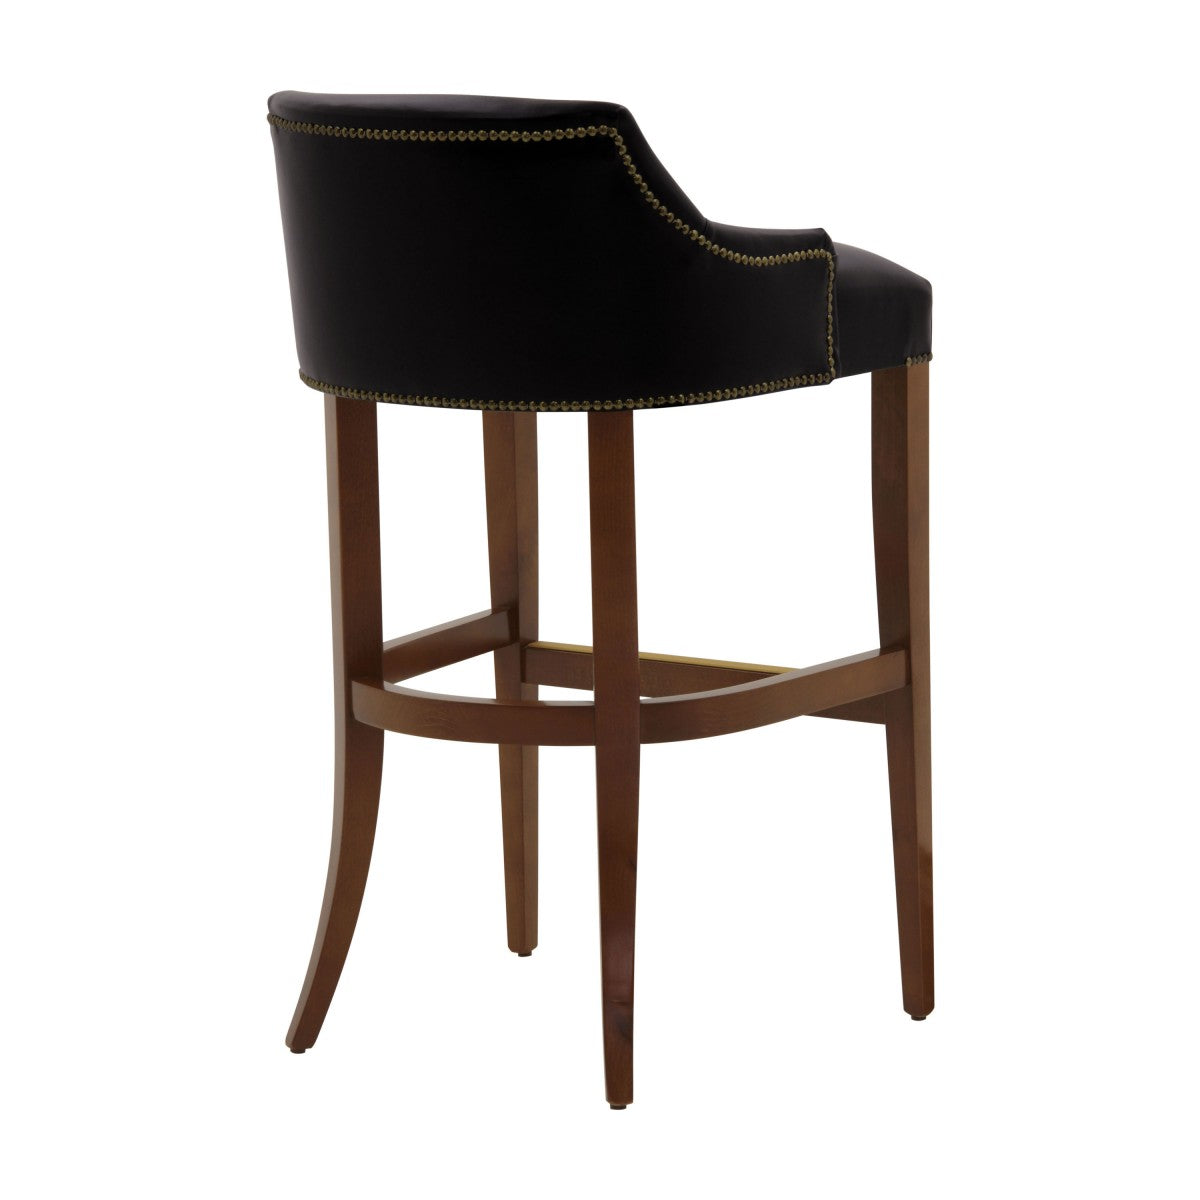 Arturo Bespoke Upholstered Contemporary Kitchen Barstool MS460B Custom Made To Order